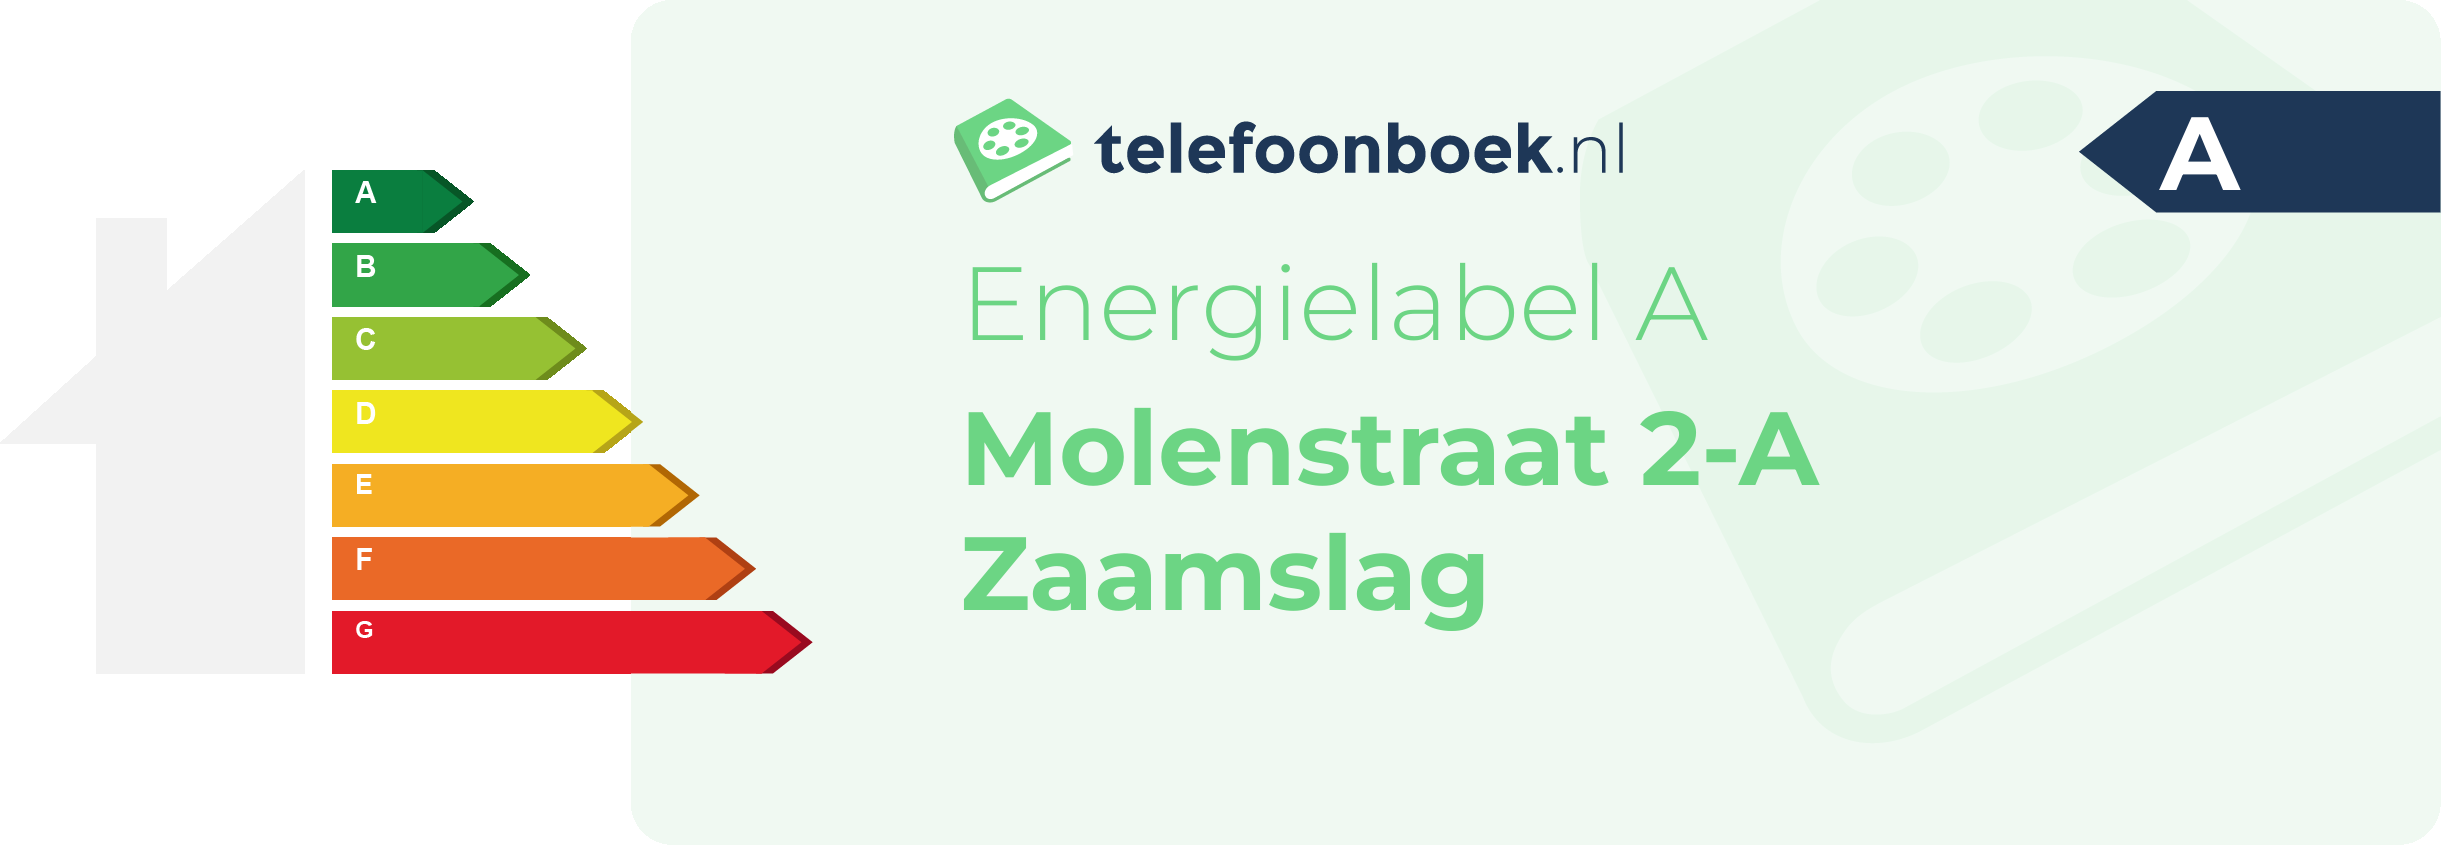 Energielabel Molenstraat 2-A Zaamslag